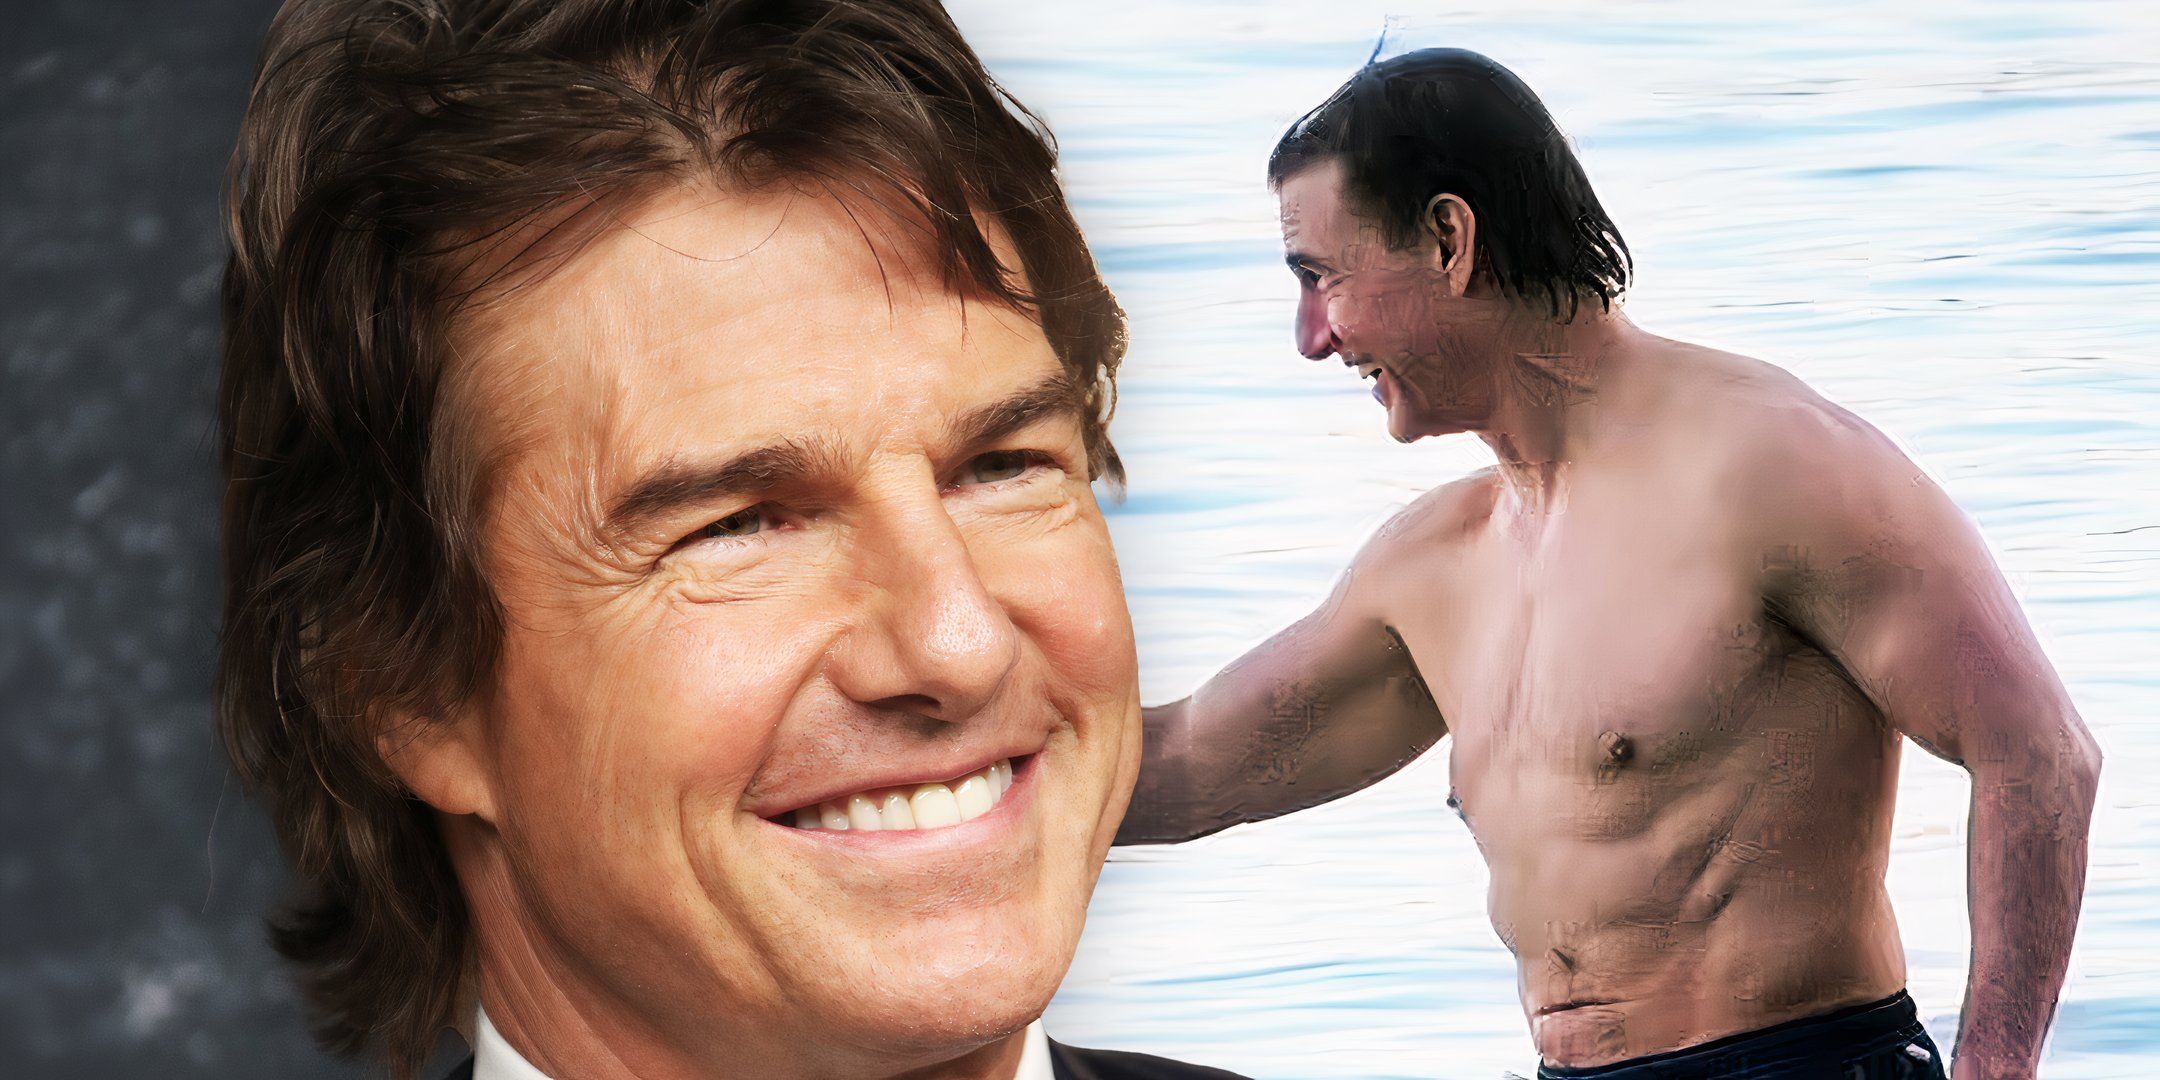 Tom Cruise shirtless at the beach